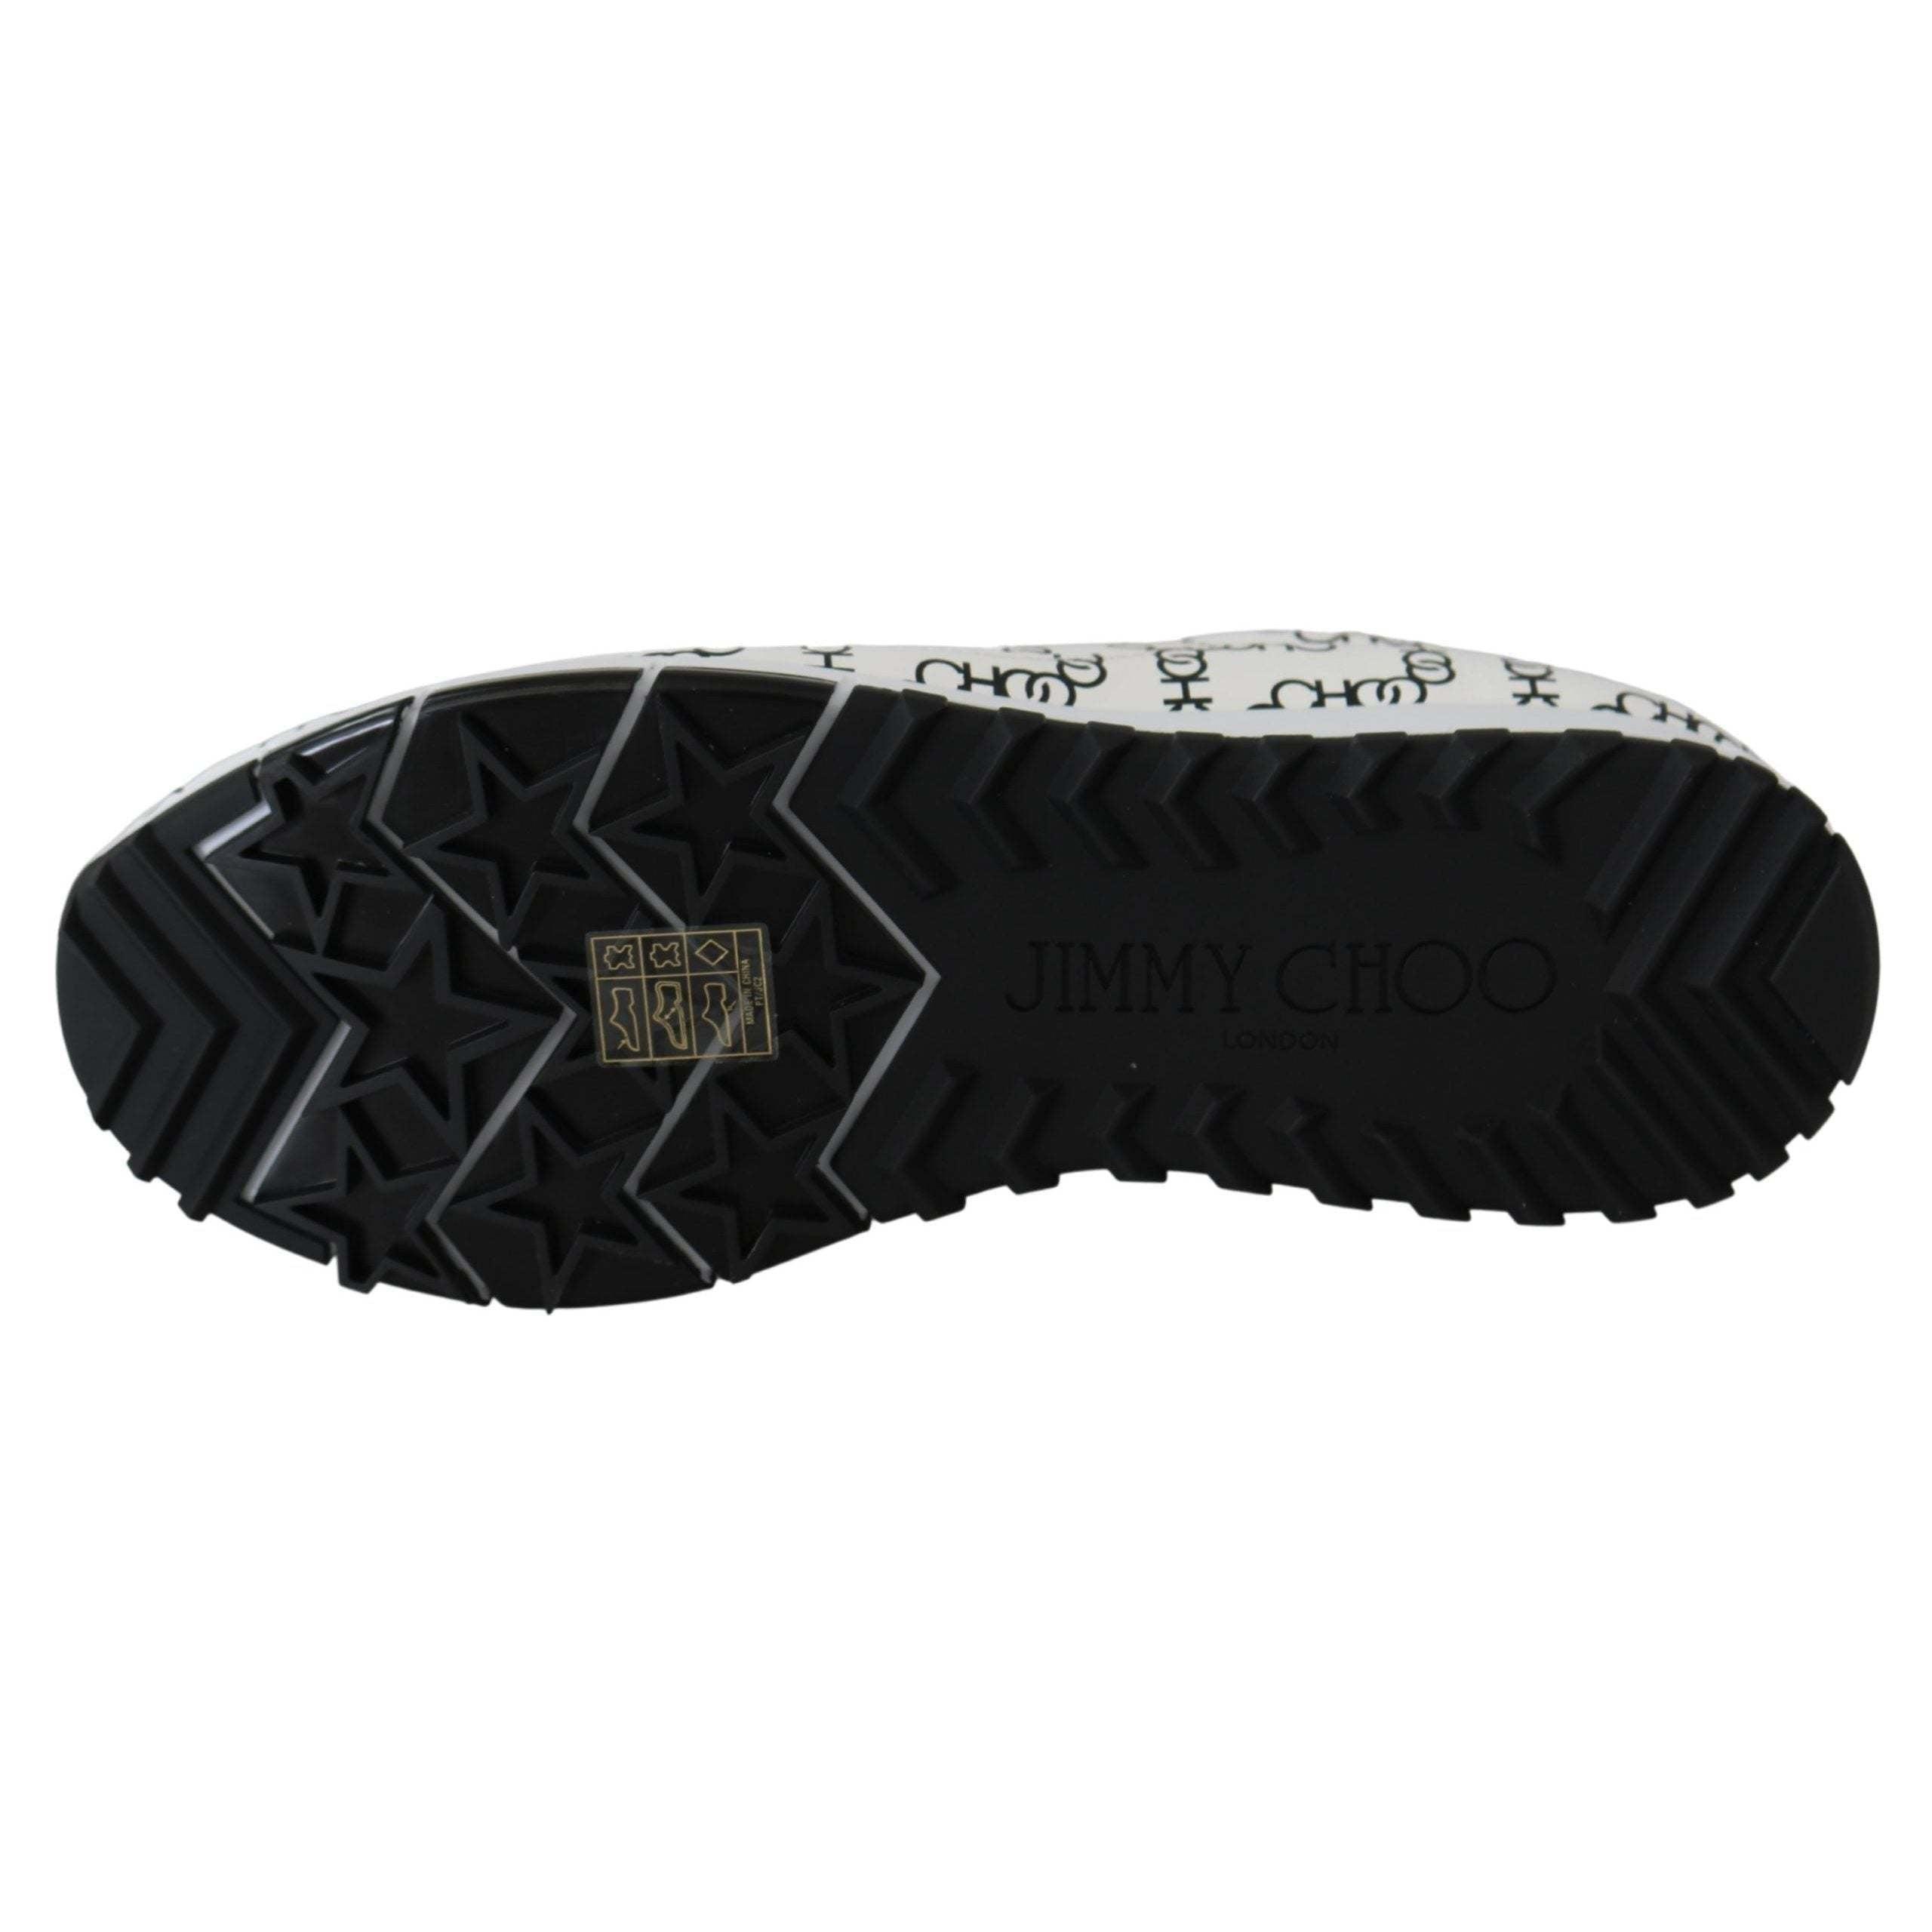 Jimmy Choo Monza White/black Leather Sneakers - Lyst